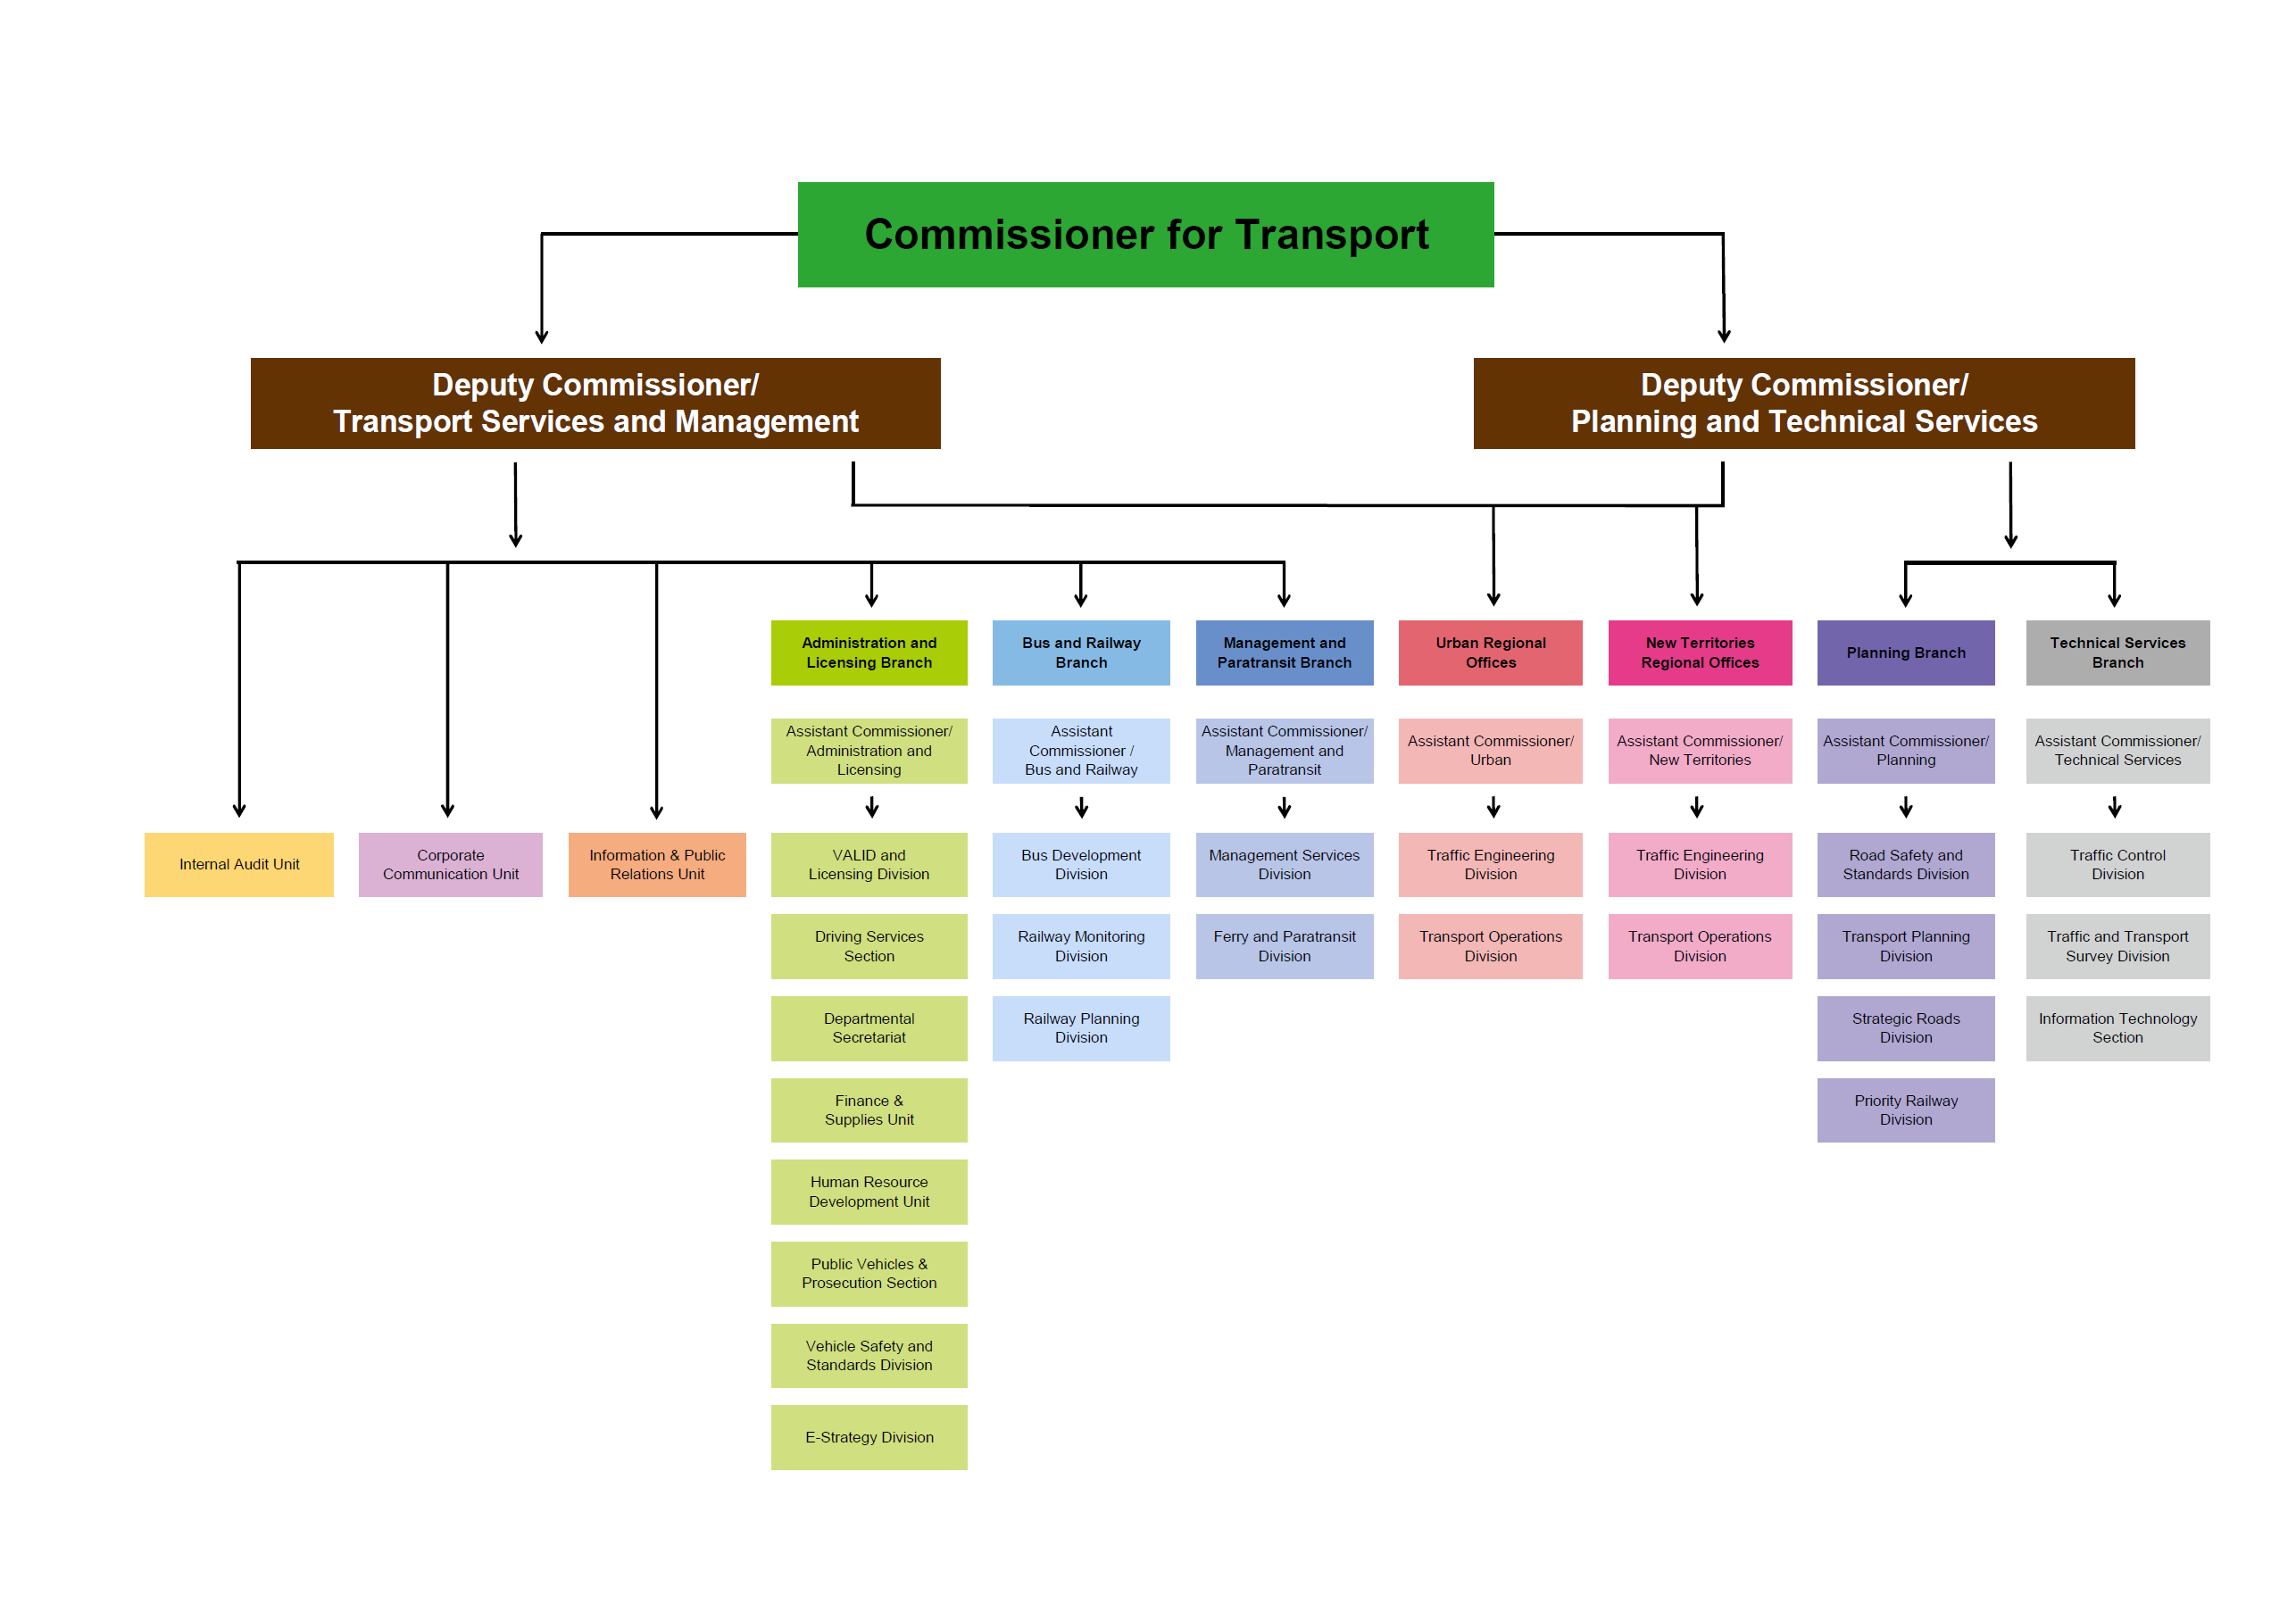 Mtr Organization Chart